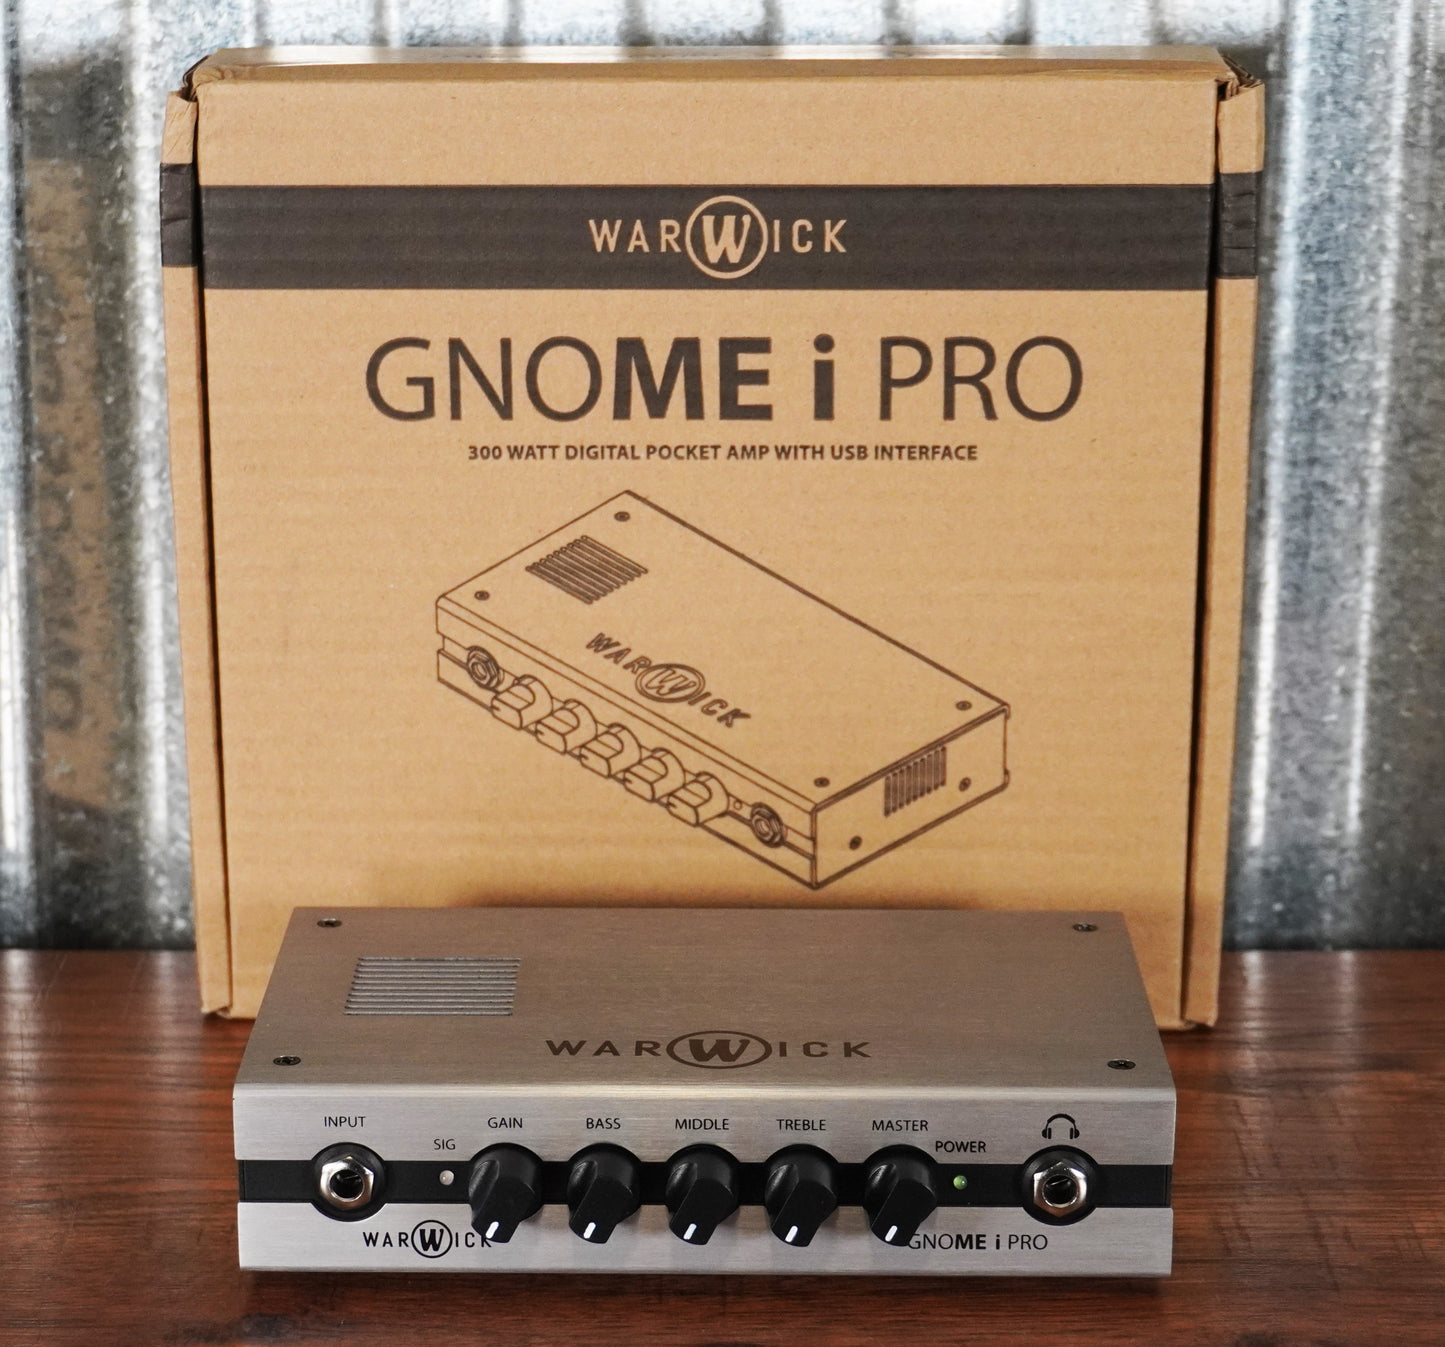 Warwick Gnome i Pro 280 Watt Pocket Bass Amplifier Head & USB Interface